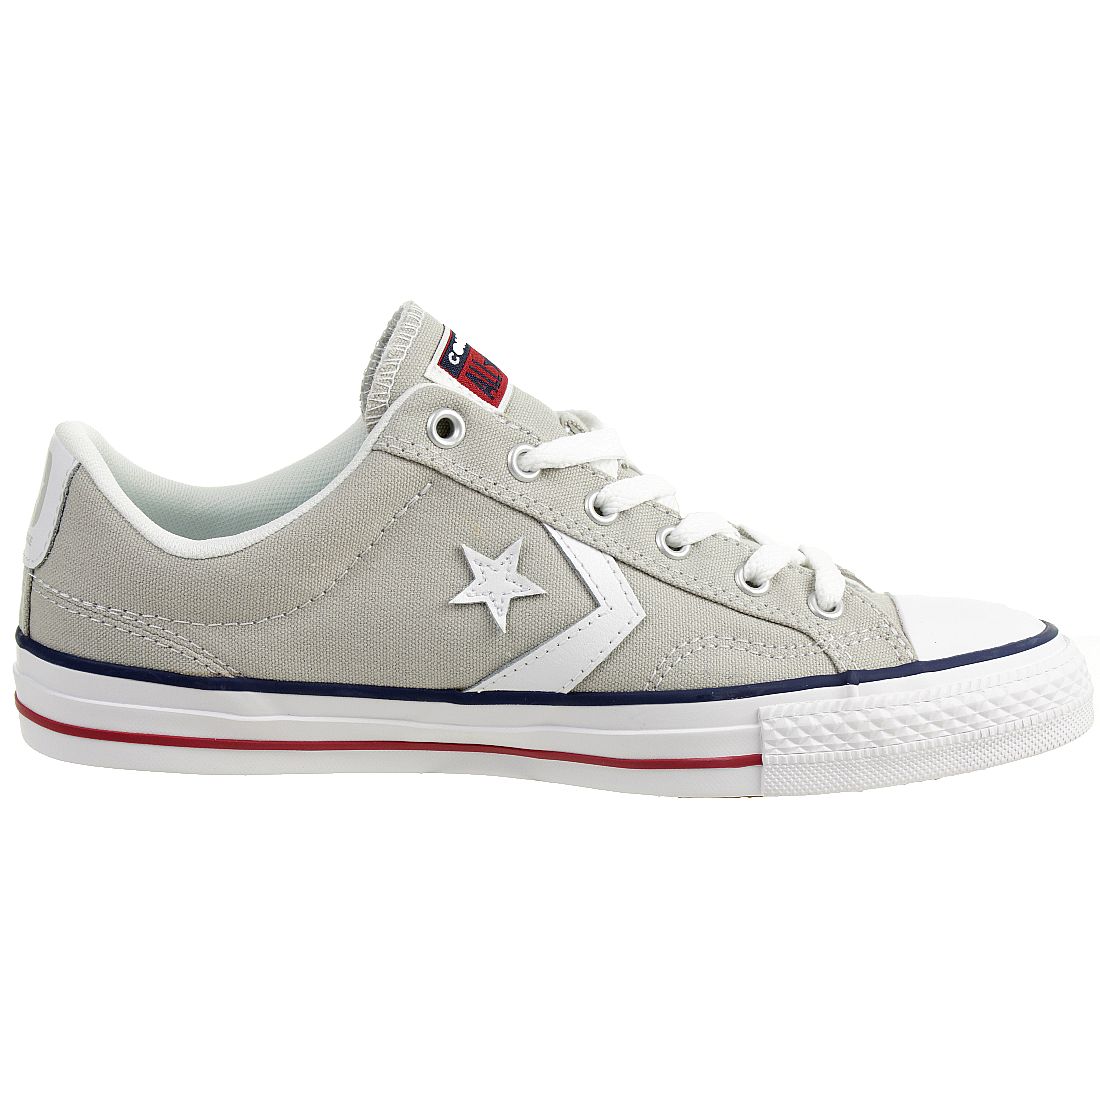 Converse STAR PLAYER OX Schuhe Sneaker Canvas Unisex Hellgrau 144148C